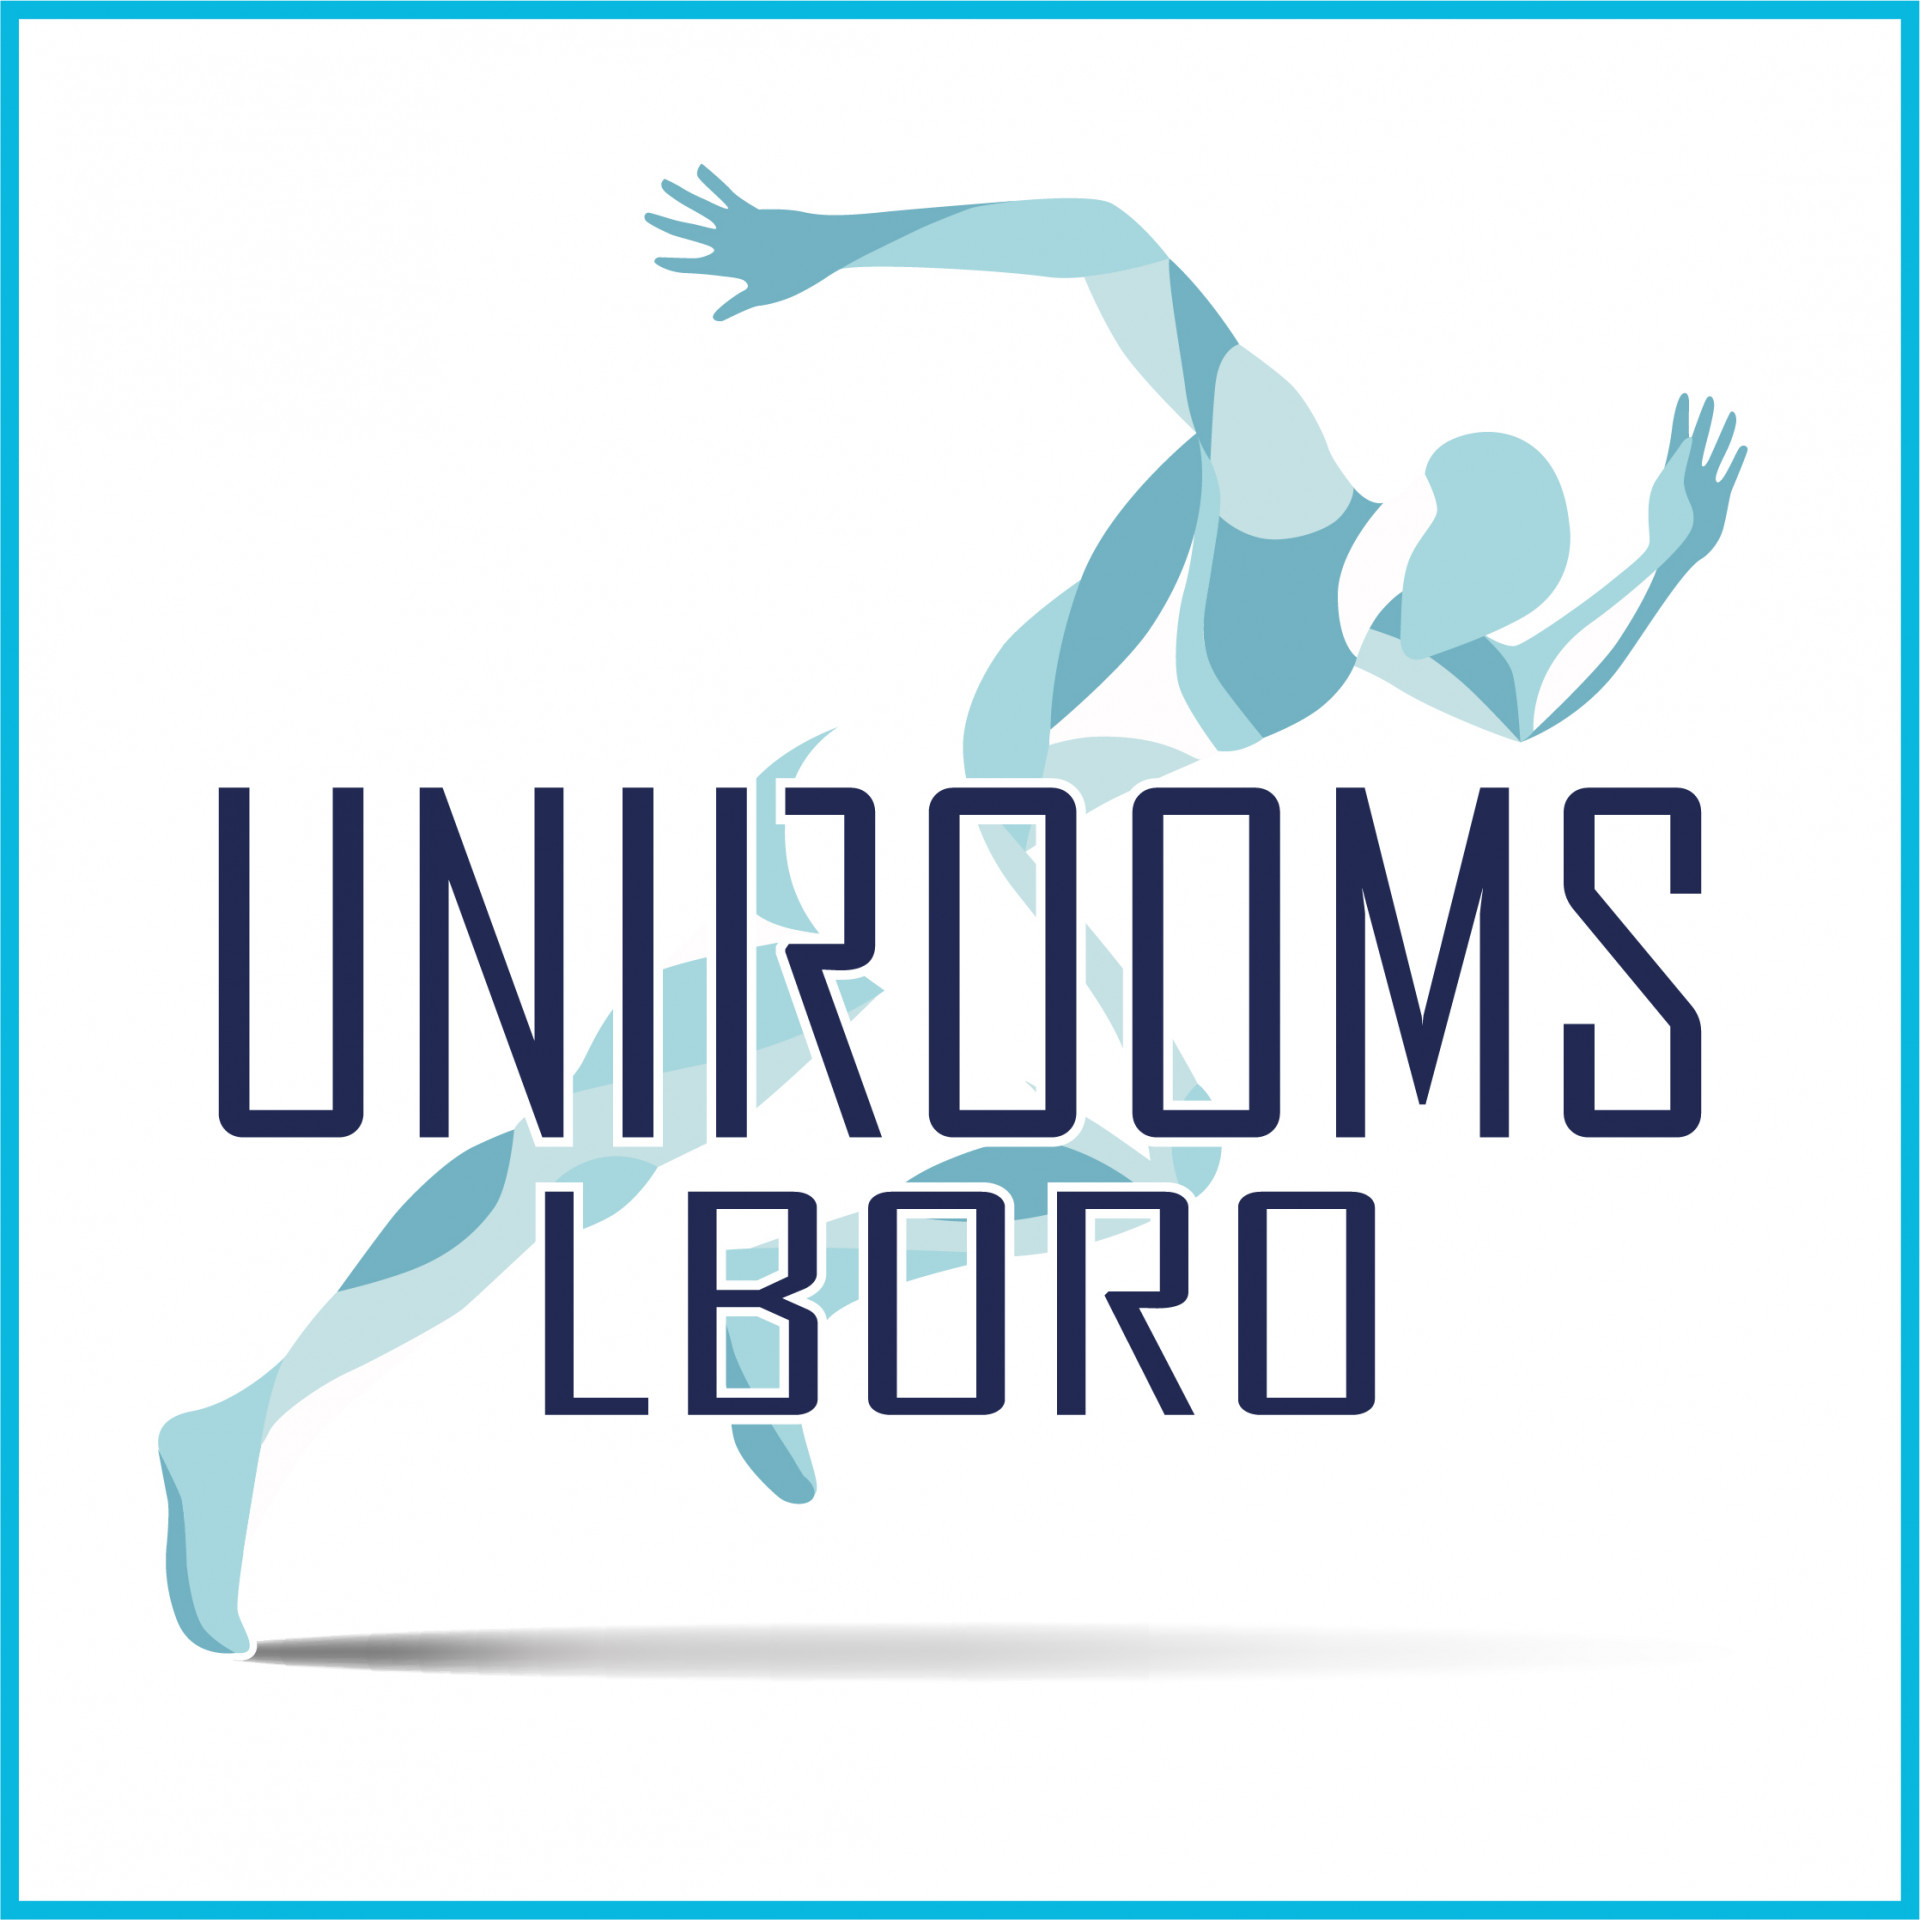 Logo for UNIROOMSLBORO